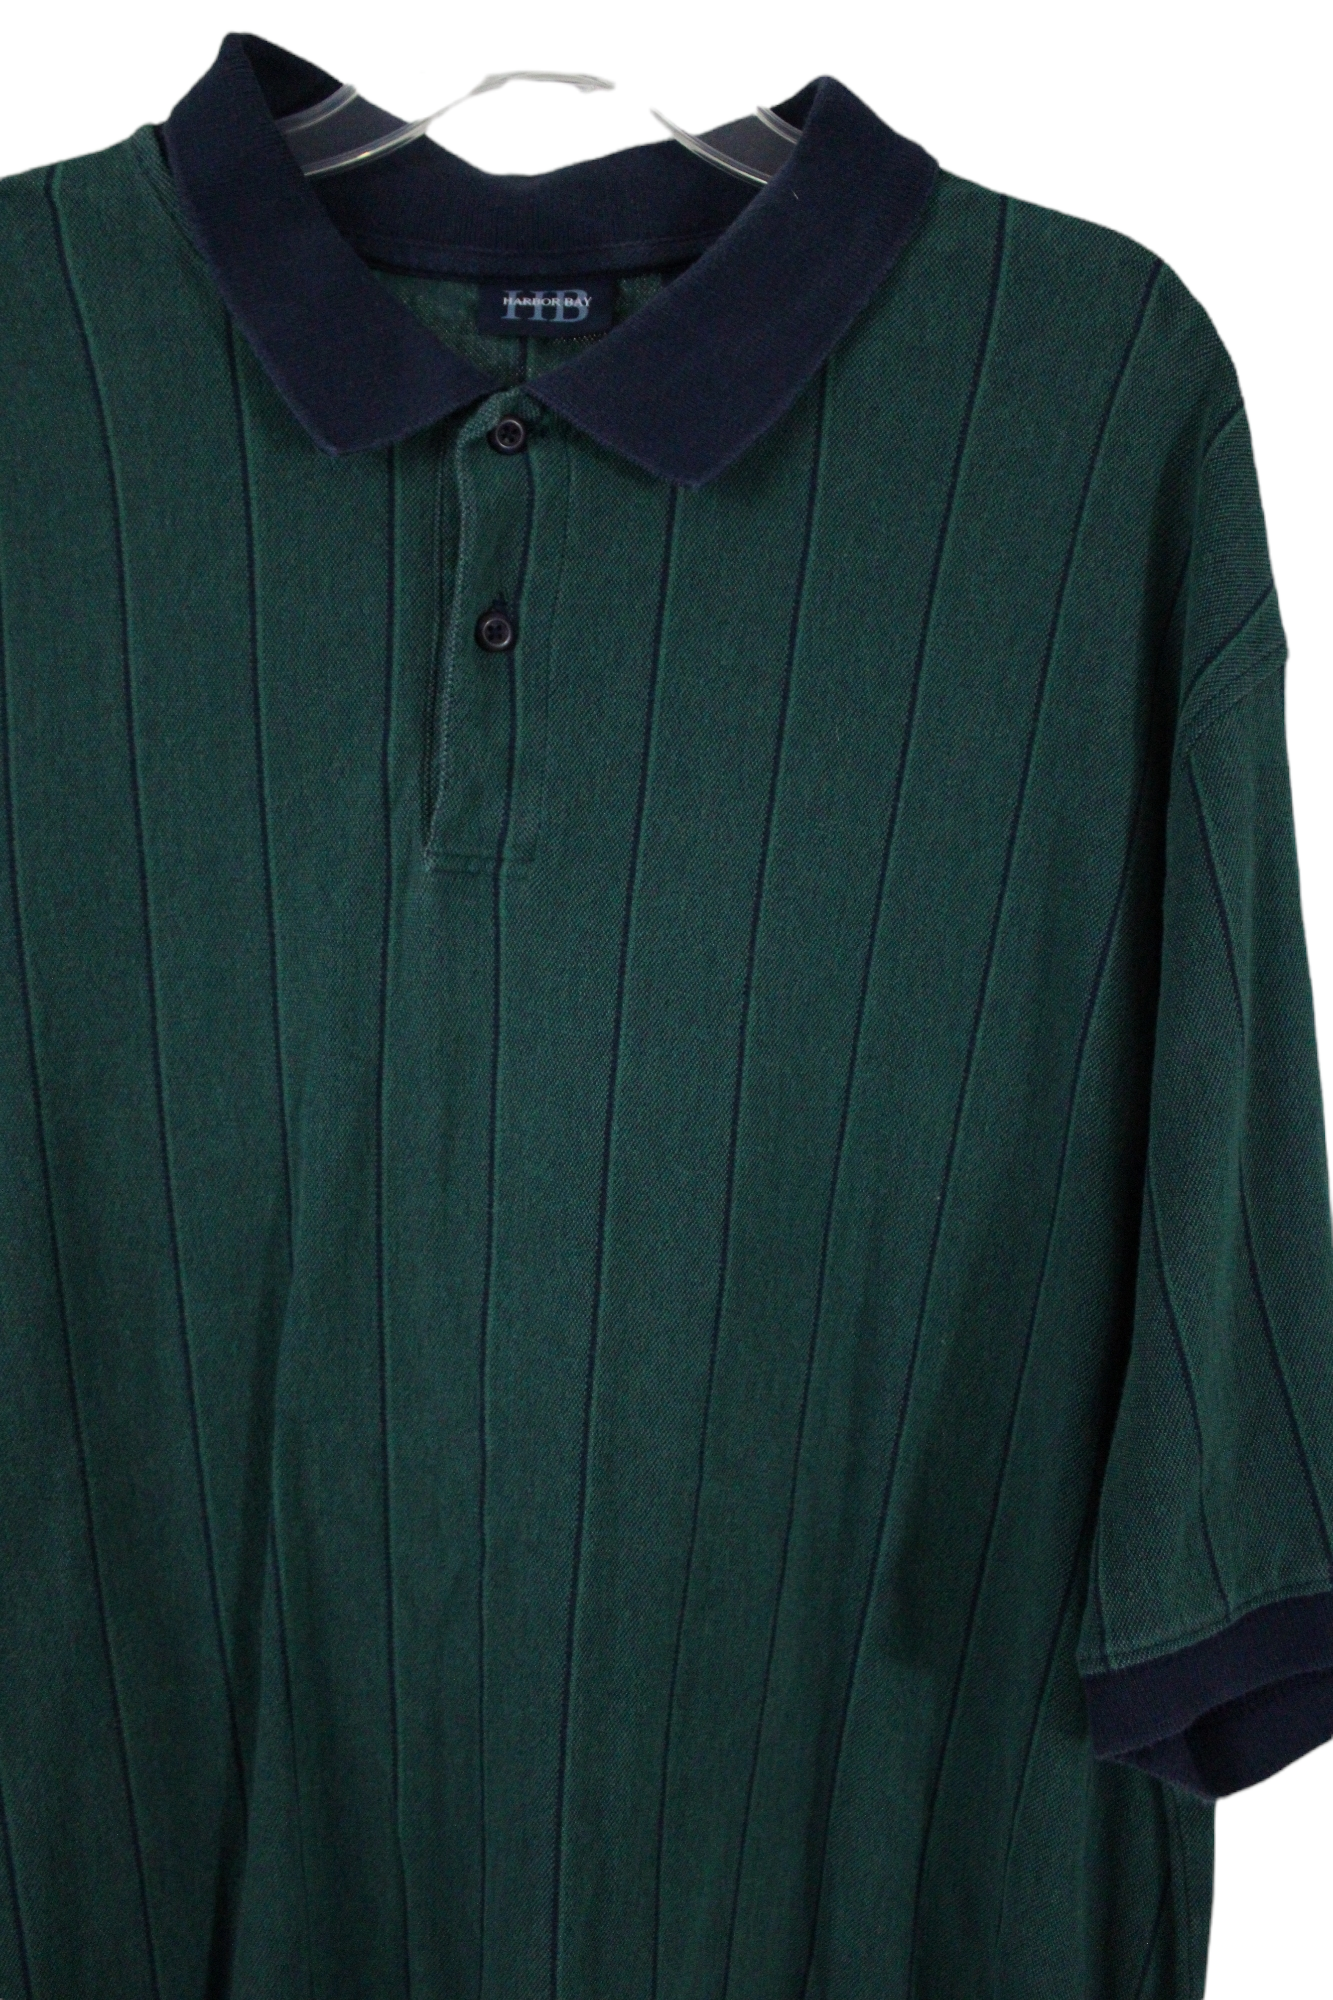 Harbor Bay Green Polo Shirt | 3XL Tall